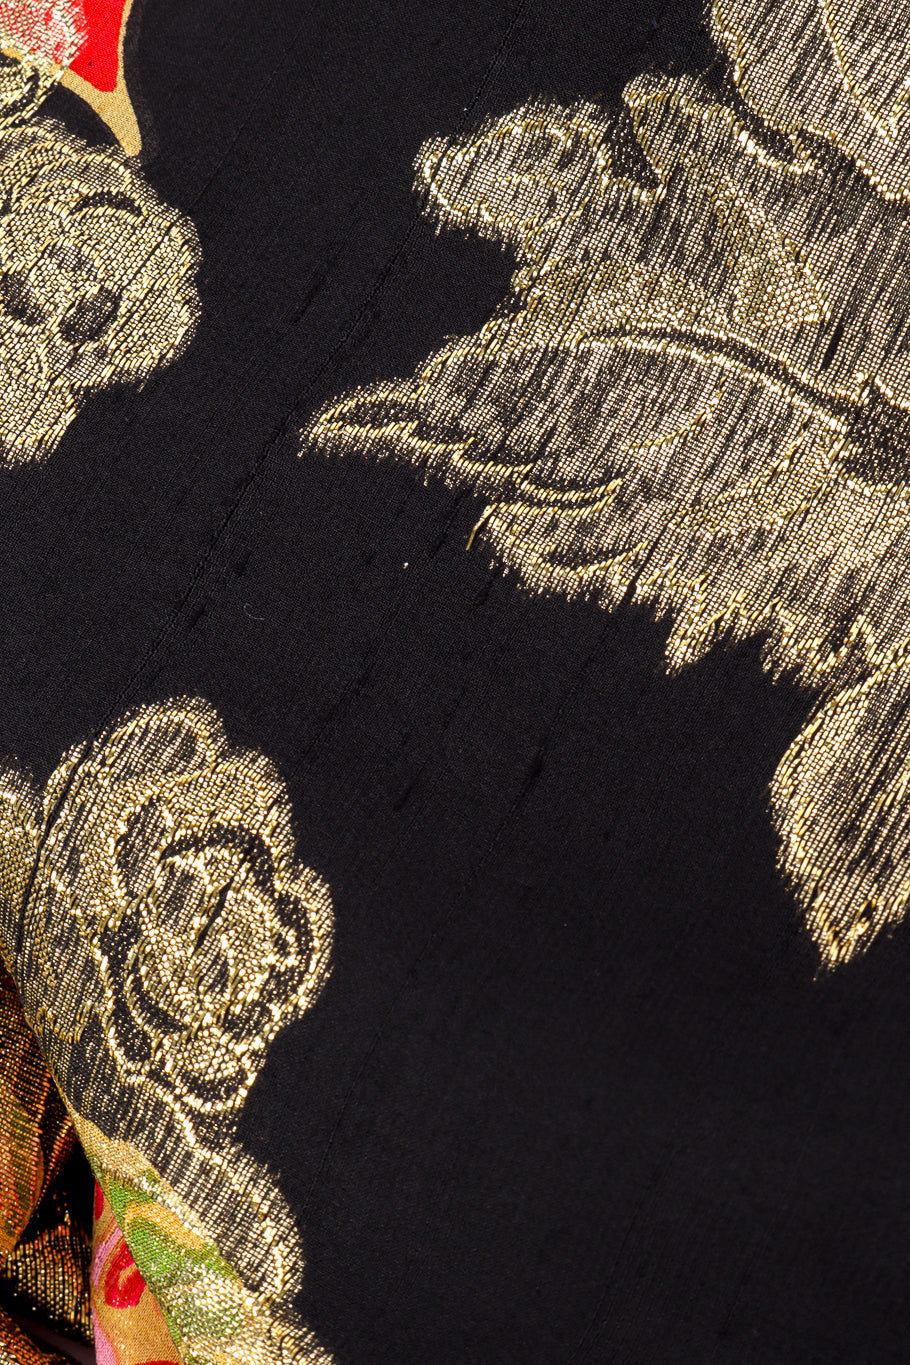 Vintage Malcolm Starr Flower Lamé Silk Dress fabric texture closeup @recessla